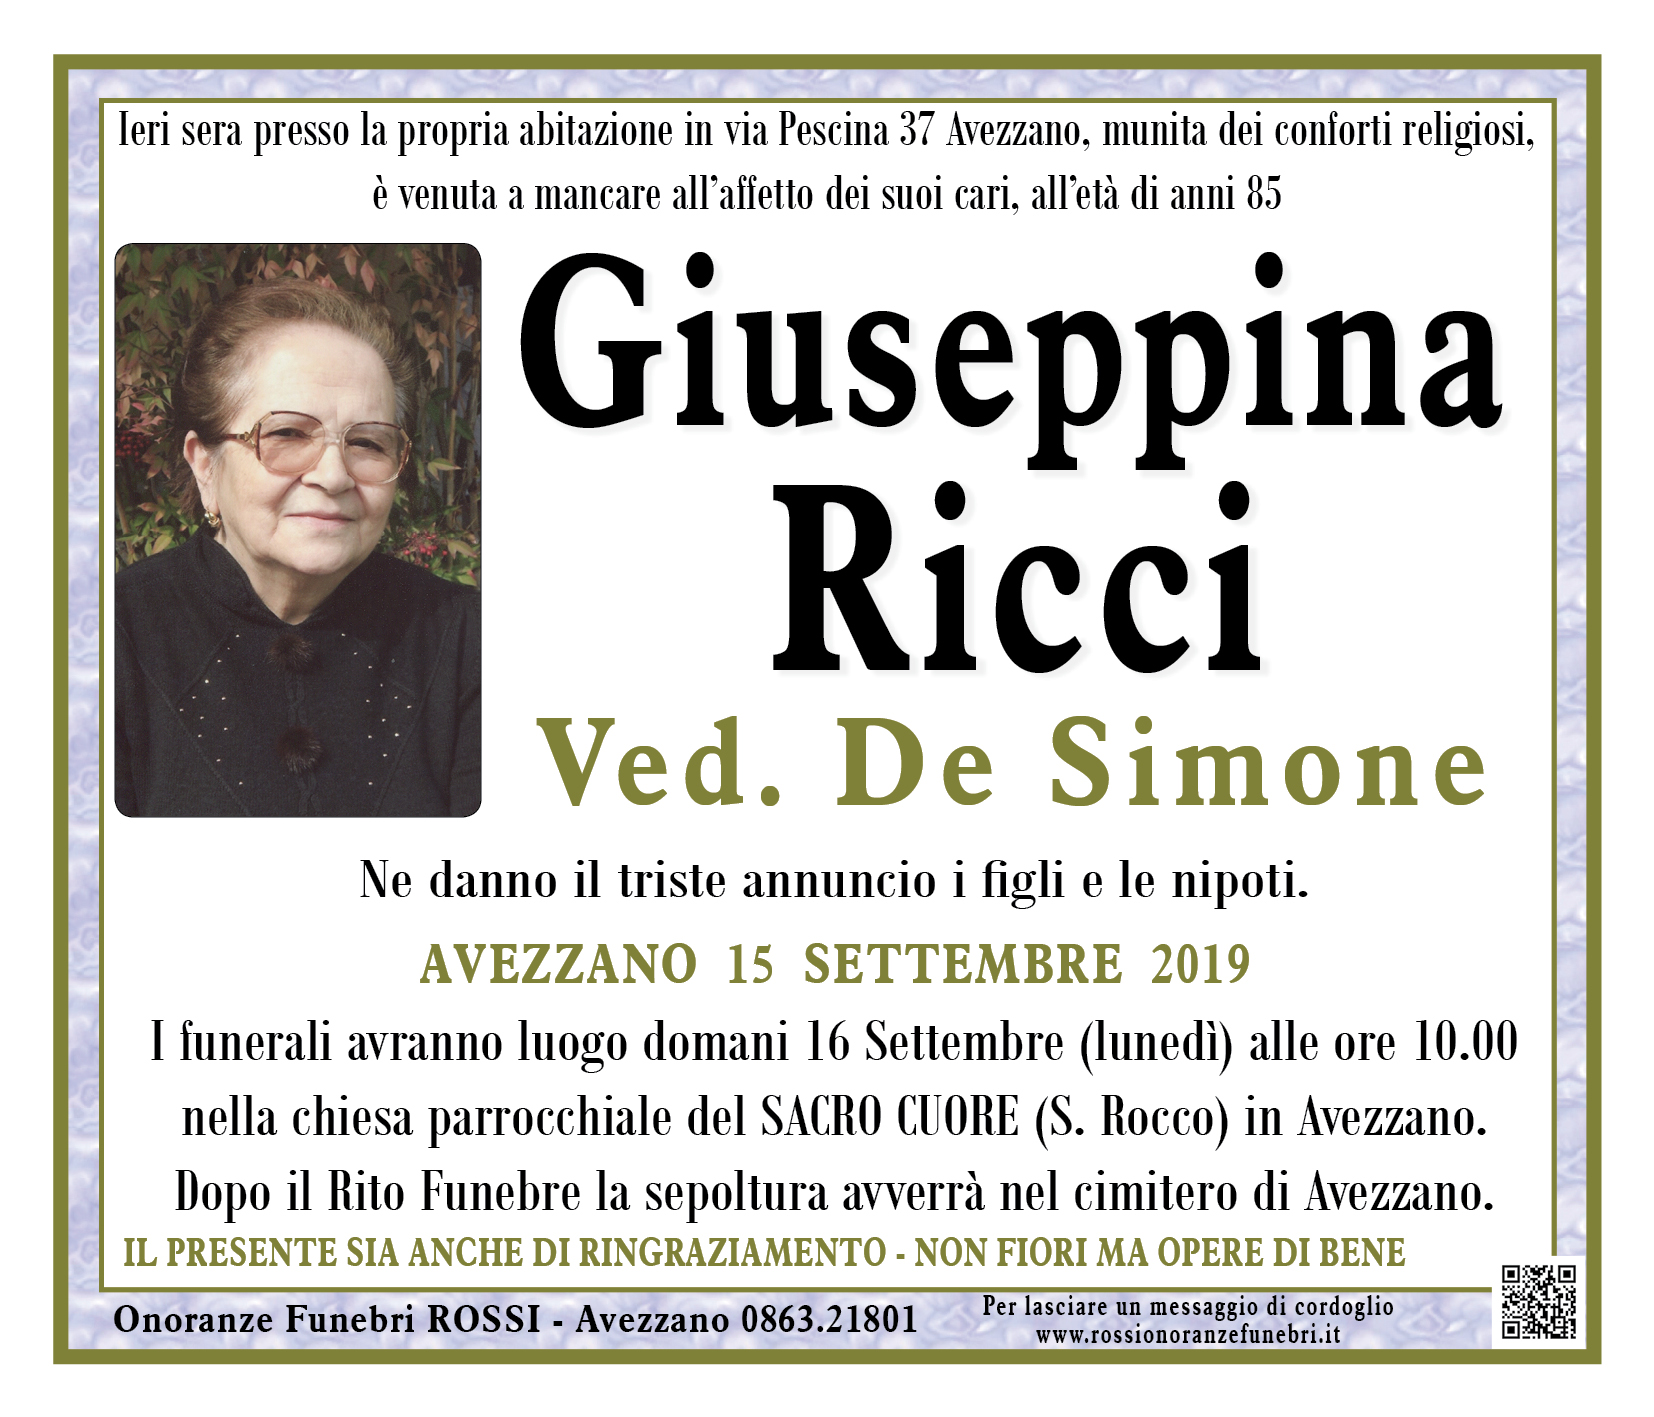 Giuseppina Ricci